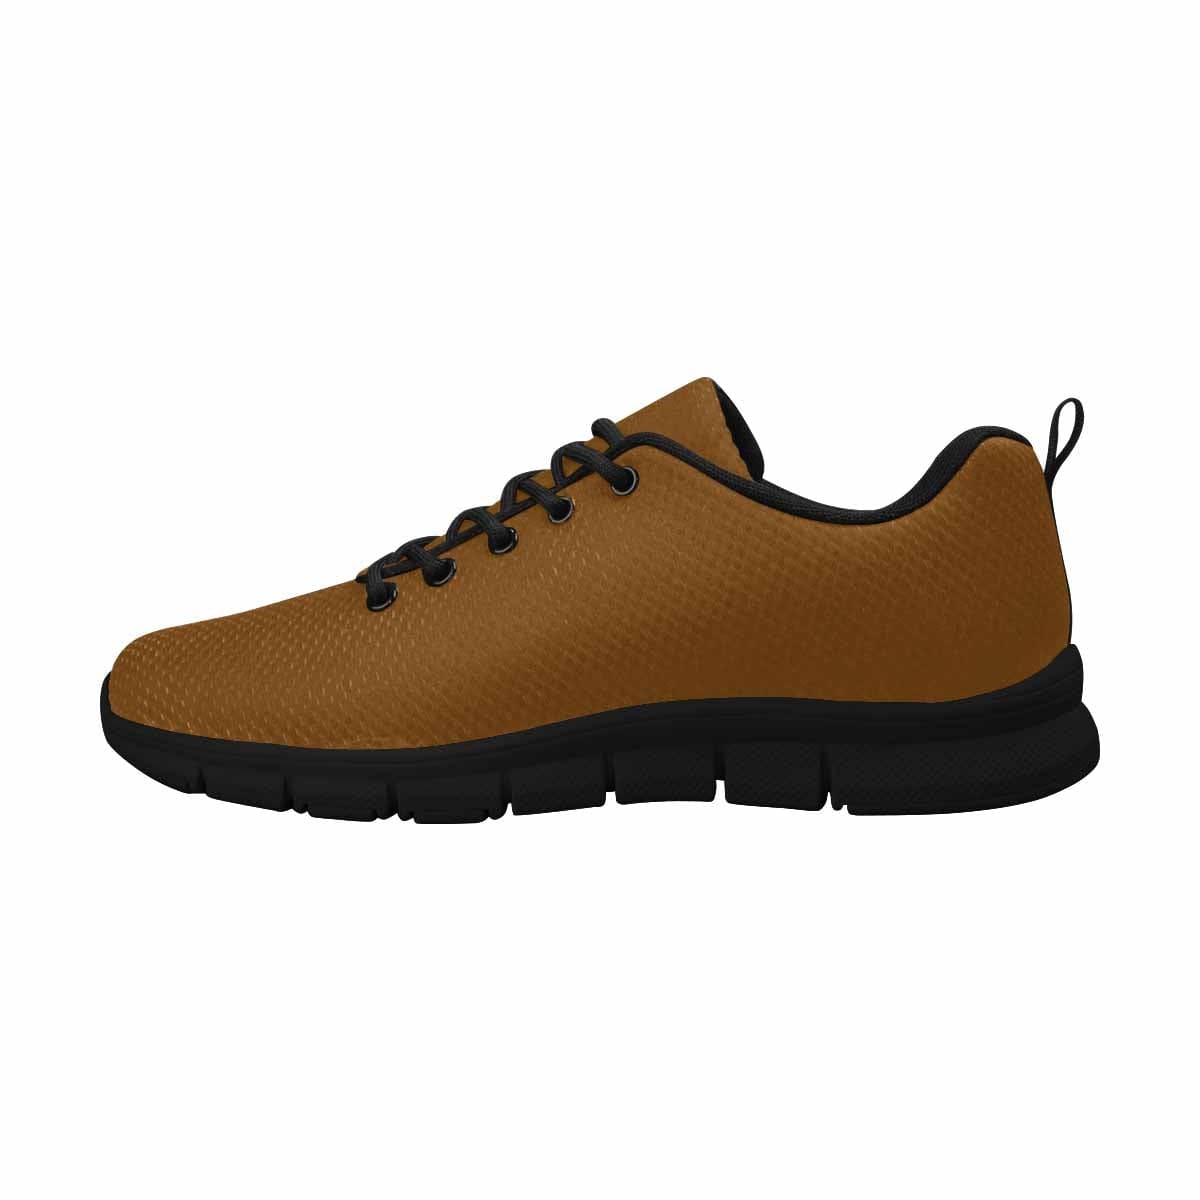 Sneakers For Women Chocolate Brown - Womens | Sneakers | Running